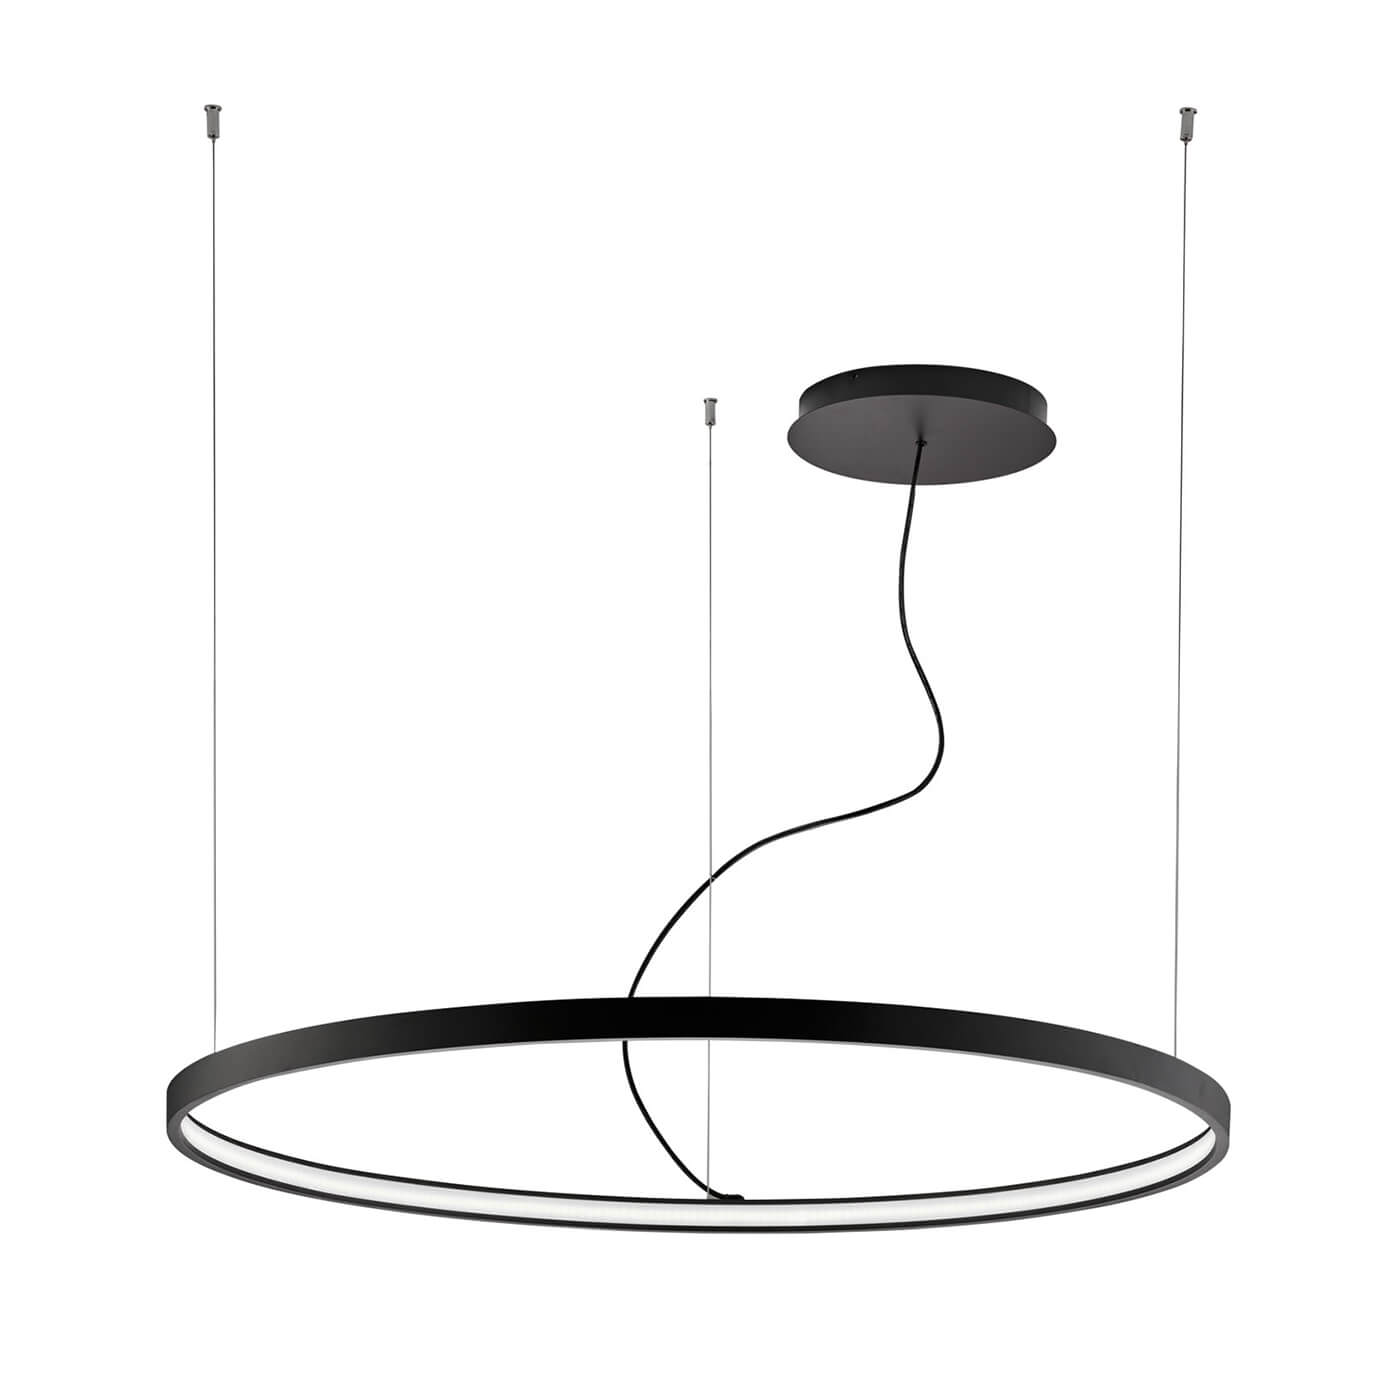 Cauti o lampa suspendata VERDI 2 neagra cu LED, design modern, minimalist, pentru living, dining sau dormitor?